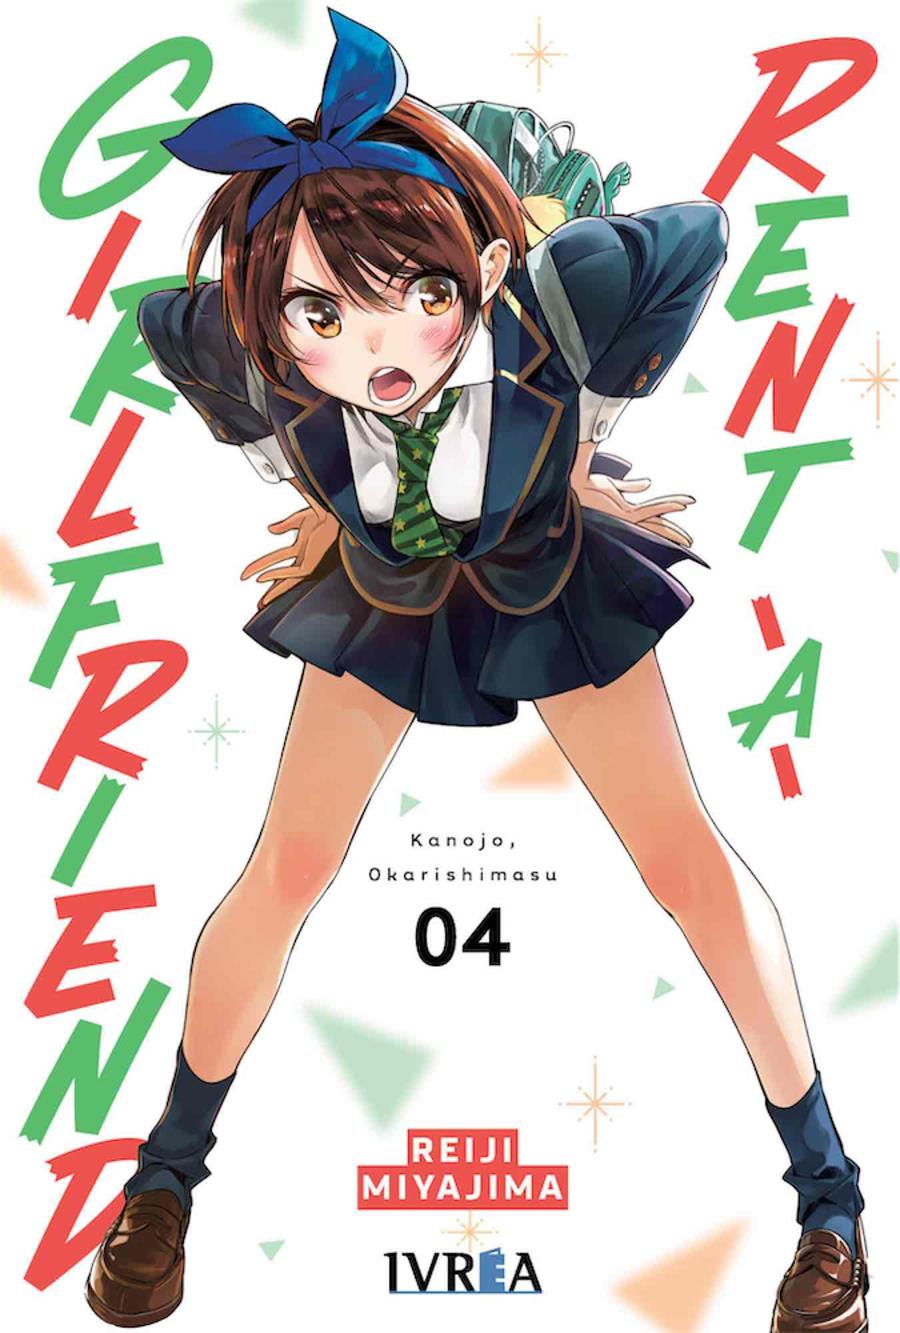 Rent-a-girlfriend 04 | N0621-IVR05 | Reiji Miyajima | Terra de Còmic - Tu tienda de cómics online especializada en cómics, manga y merchandising